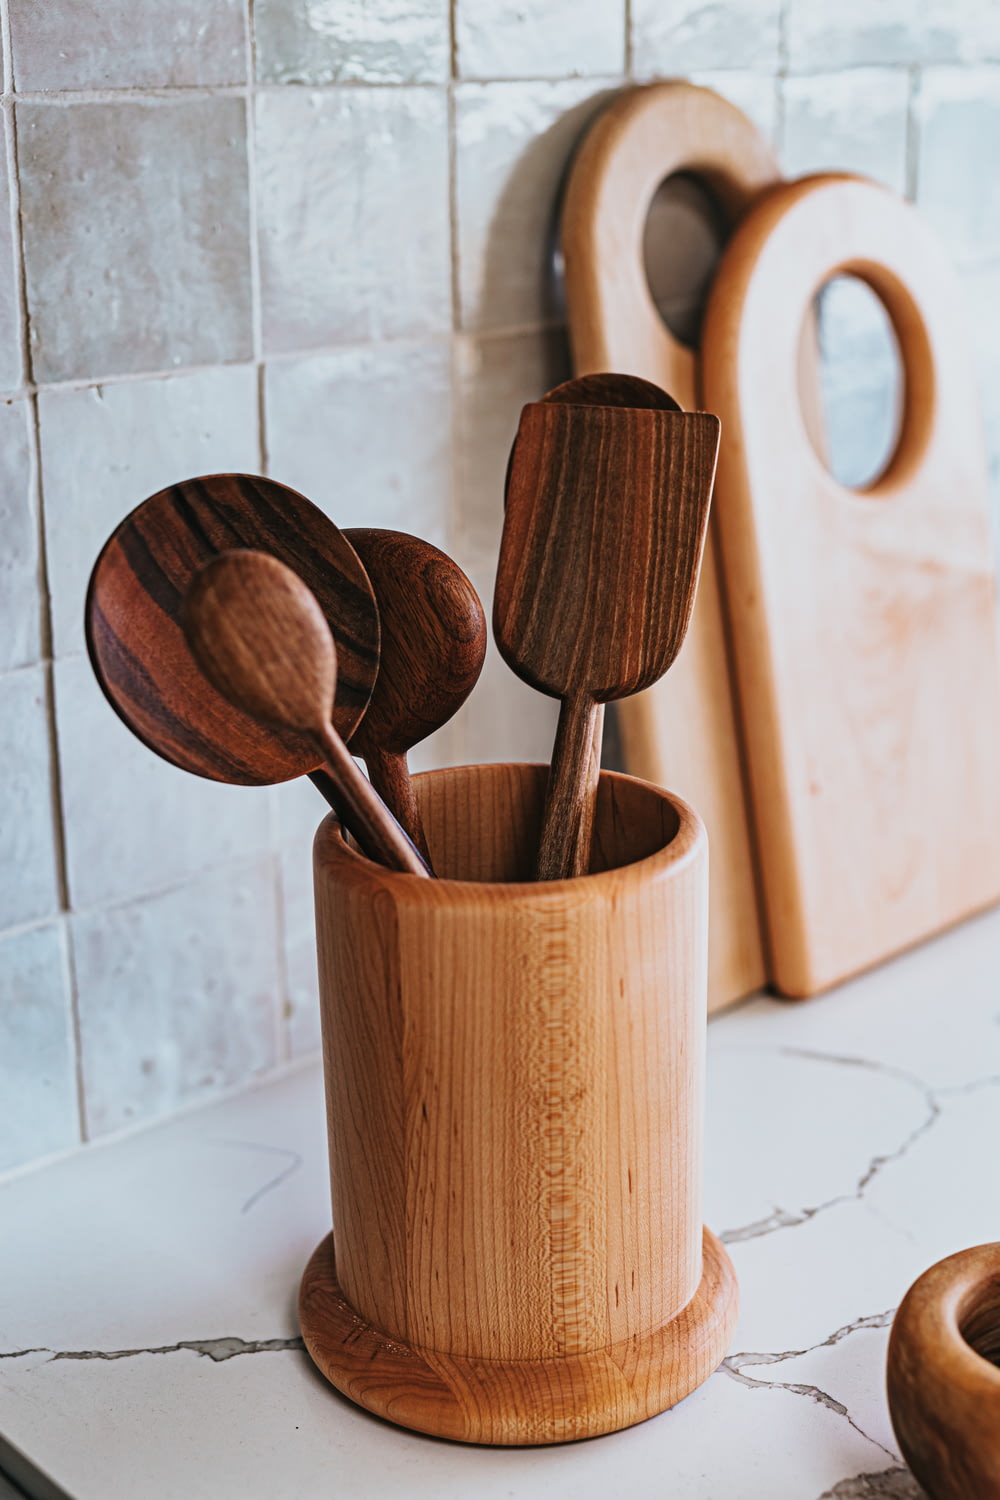 cucharas de madera marrón en taza de madera marrón